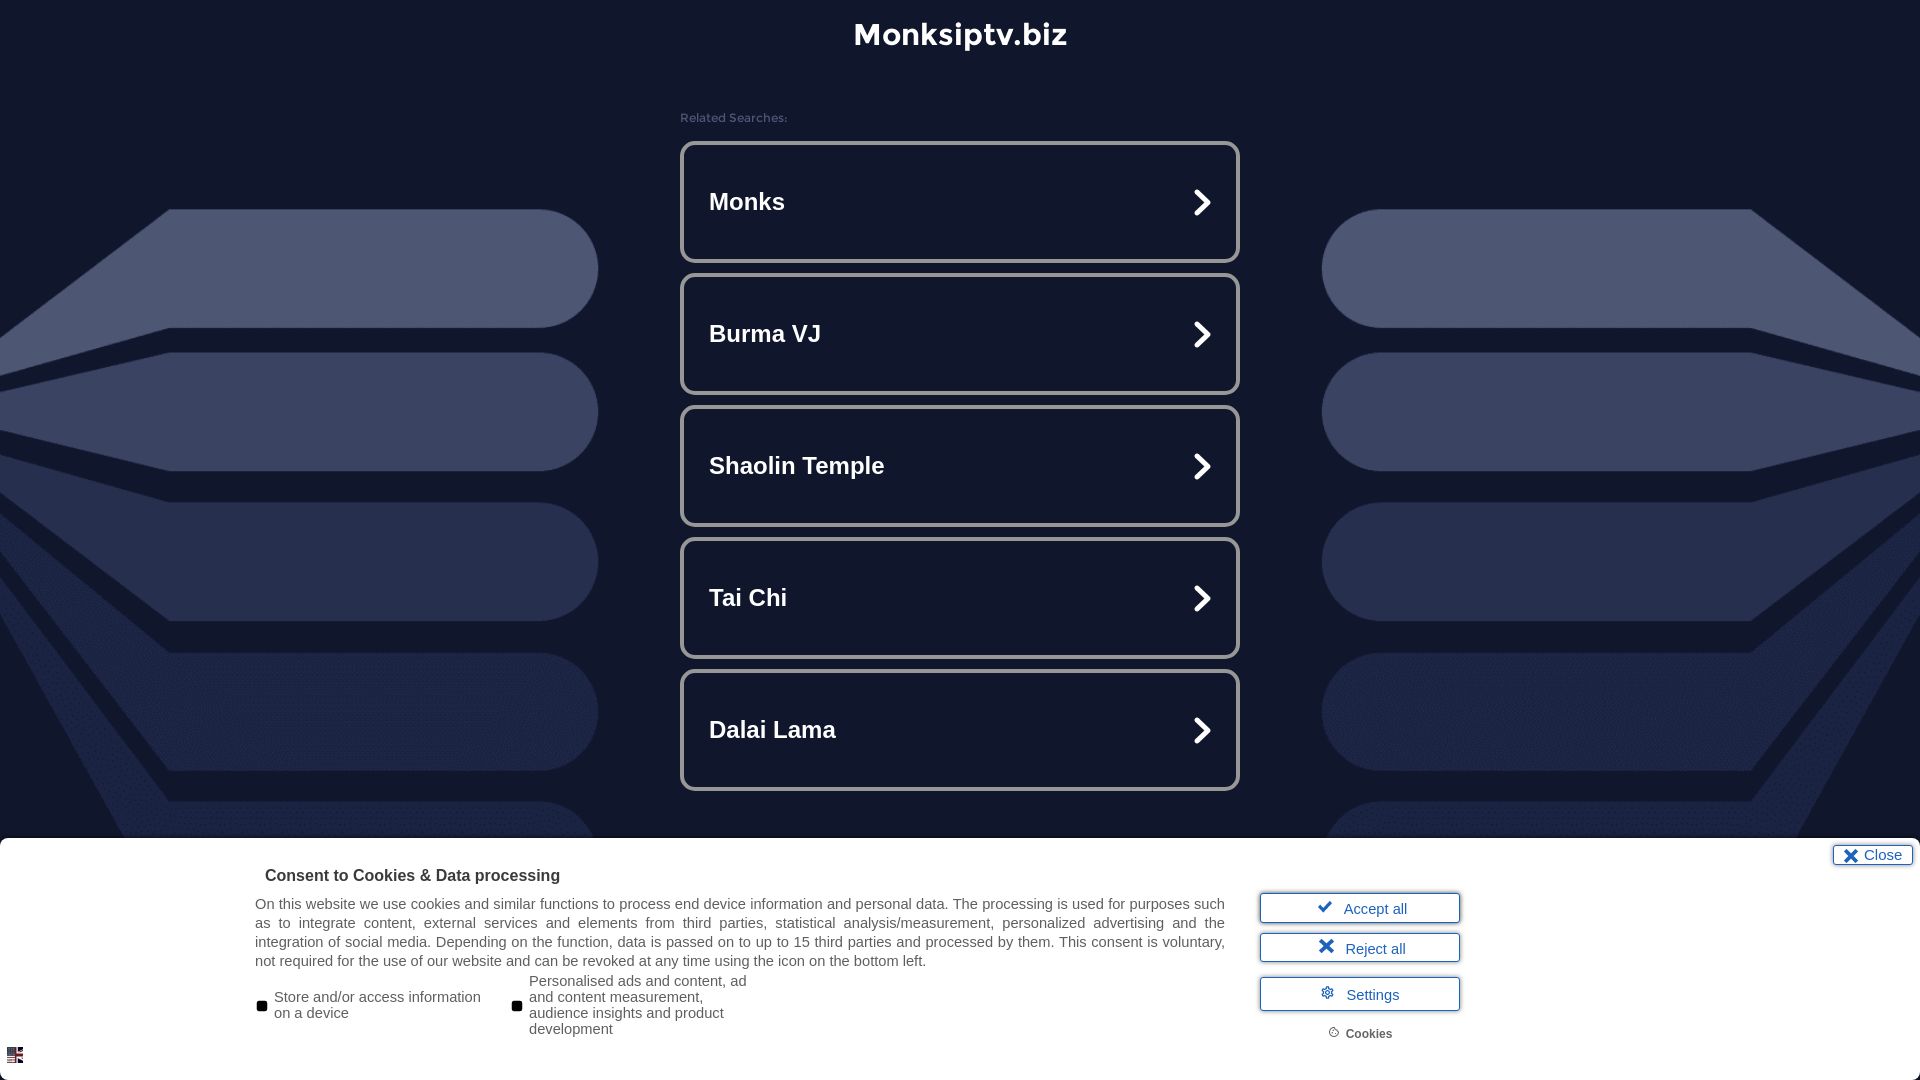 Status do site monksiptv.biz está   ONLINE